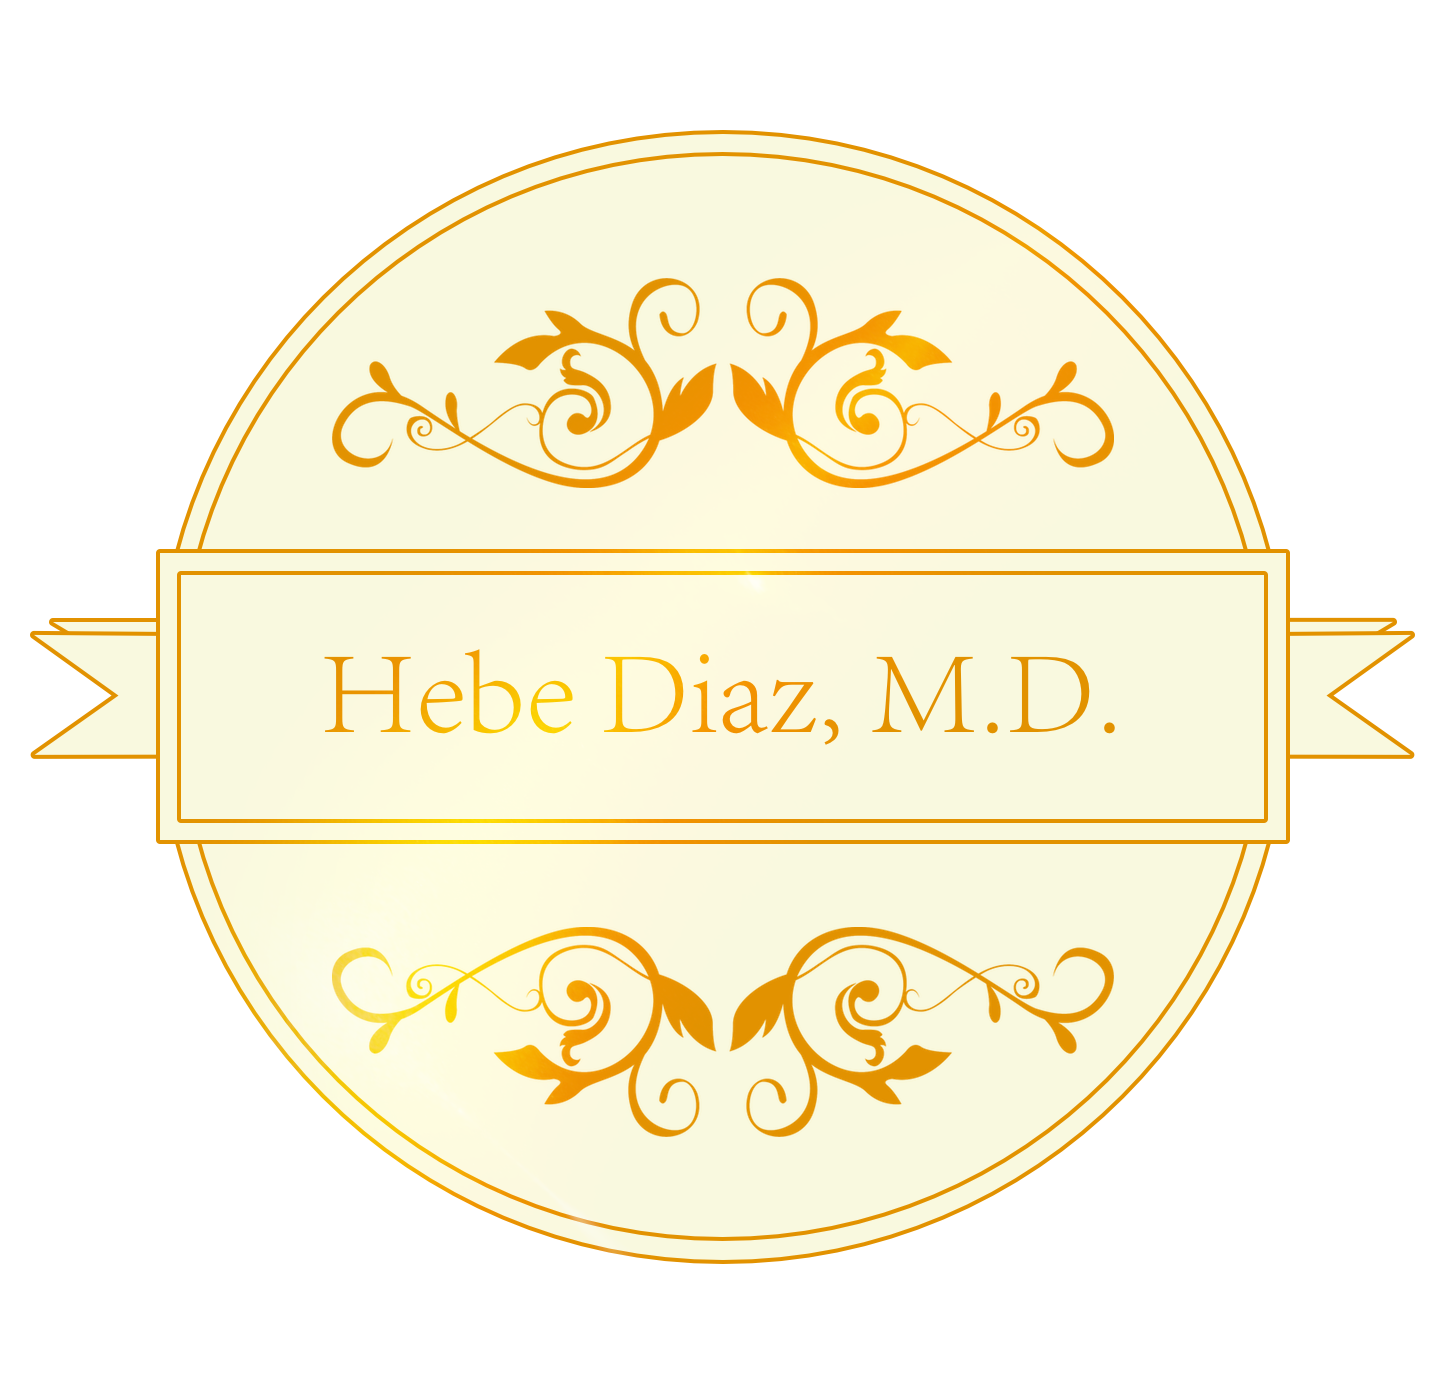 Hebe Diaz, M.D.